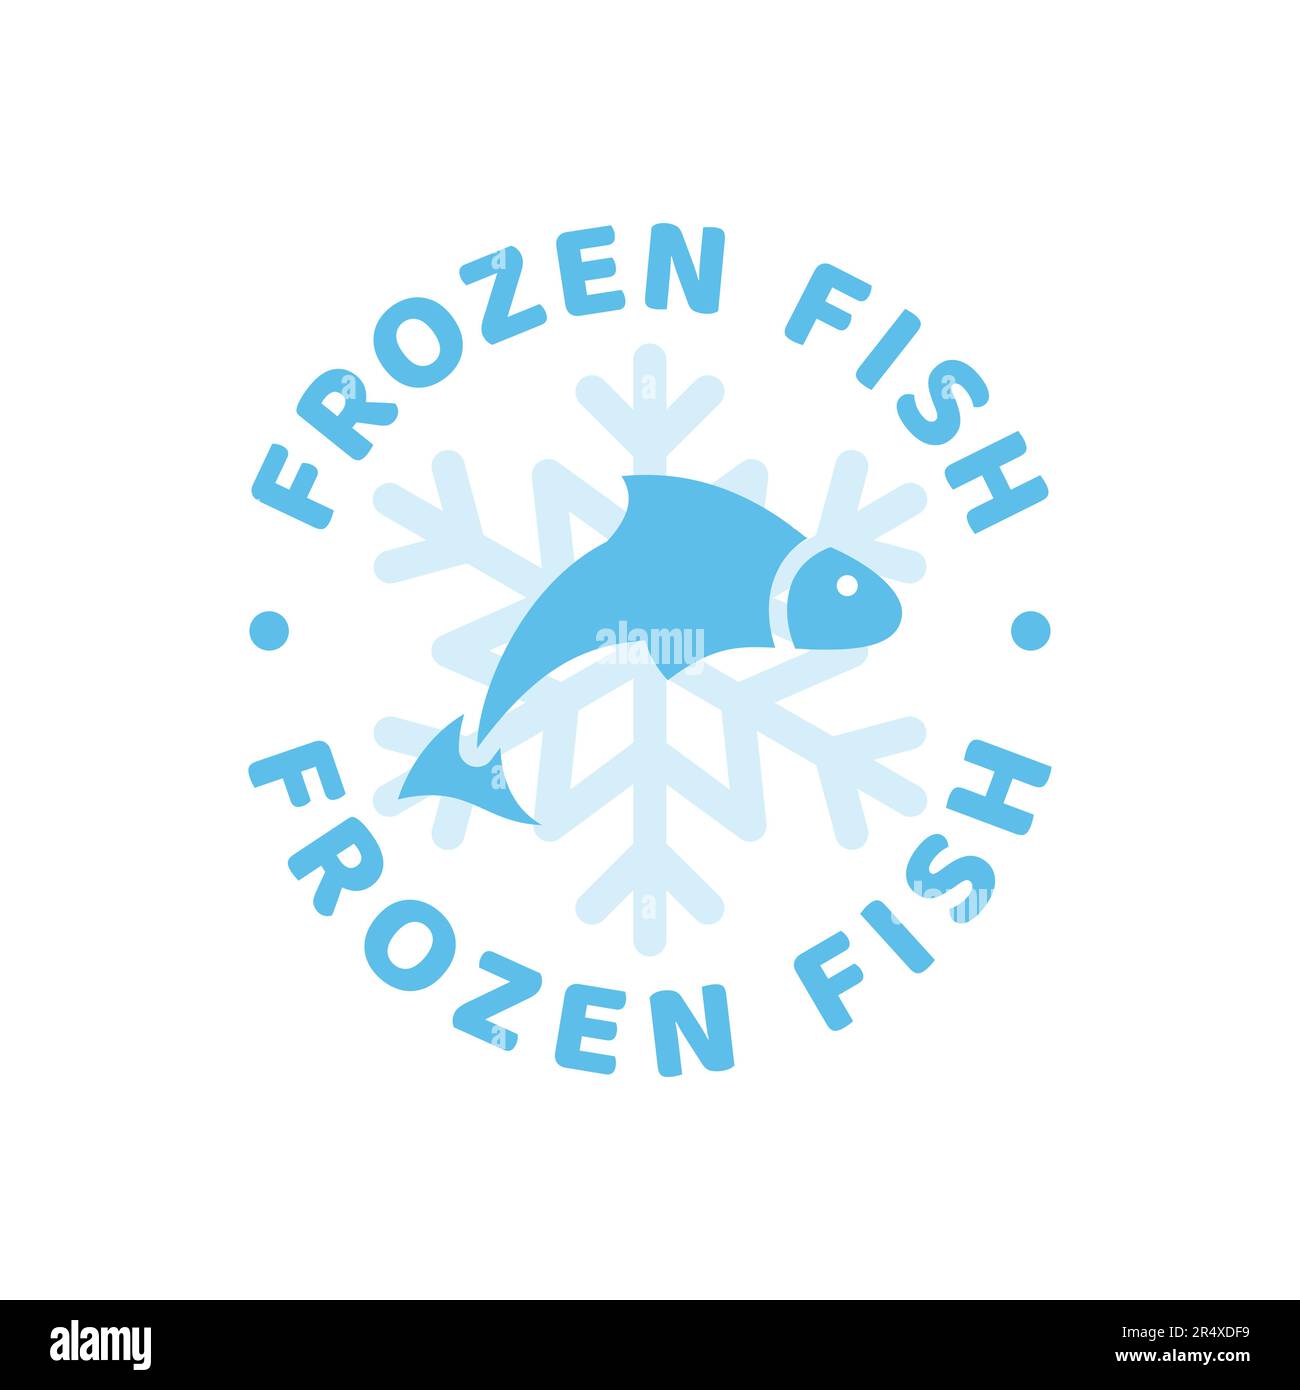 https://c8.alamy.com/comp/2R4XDF9/frozen-fish-product-vector-label-blue-sticker-stamp-2R4XDF9.jpg